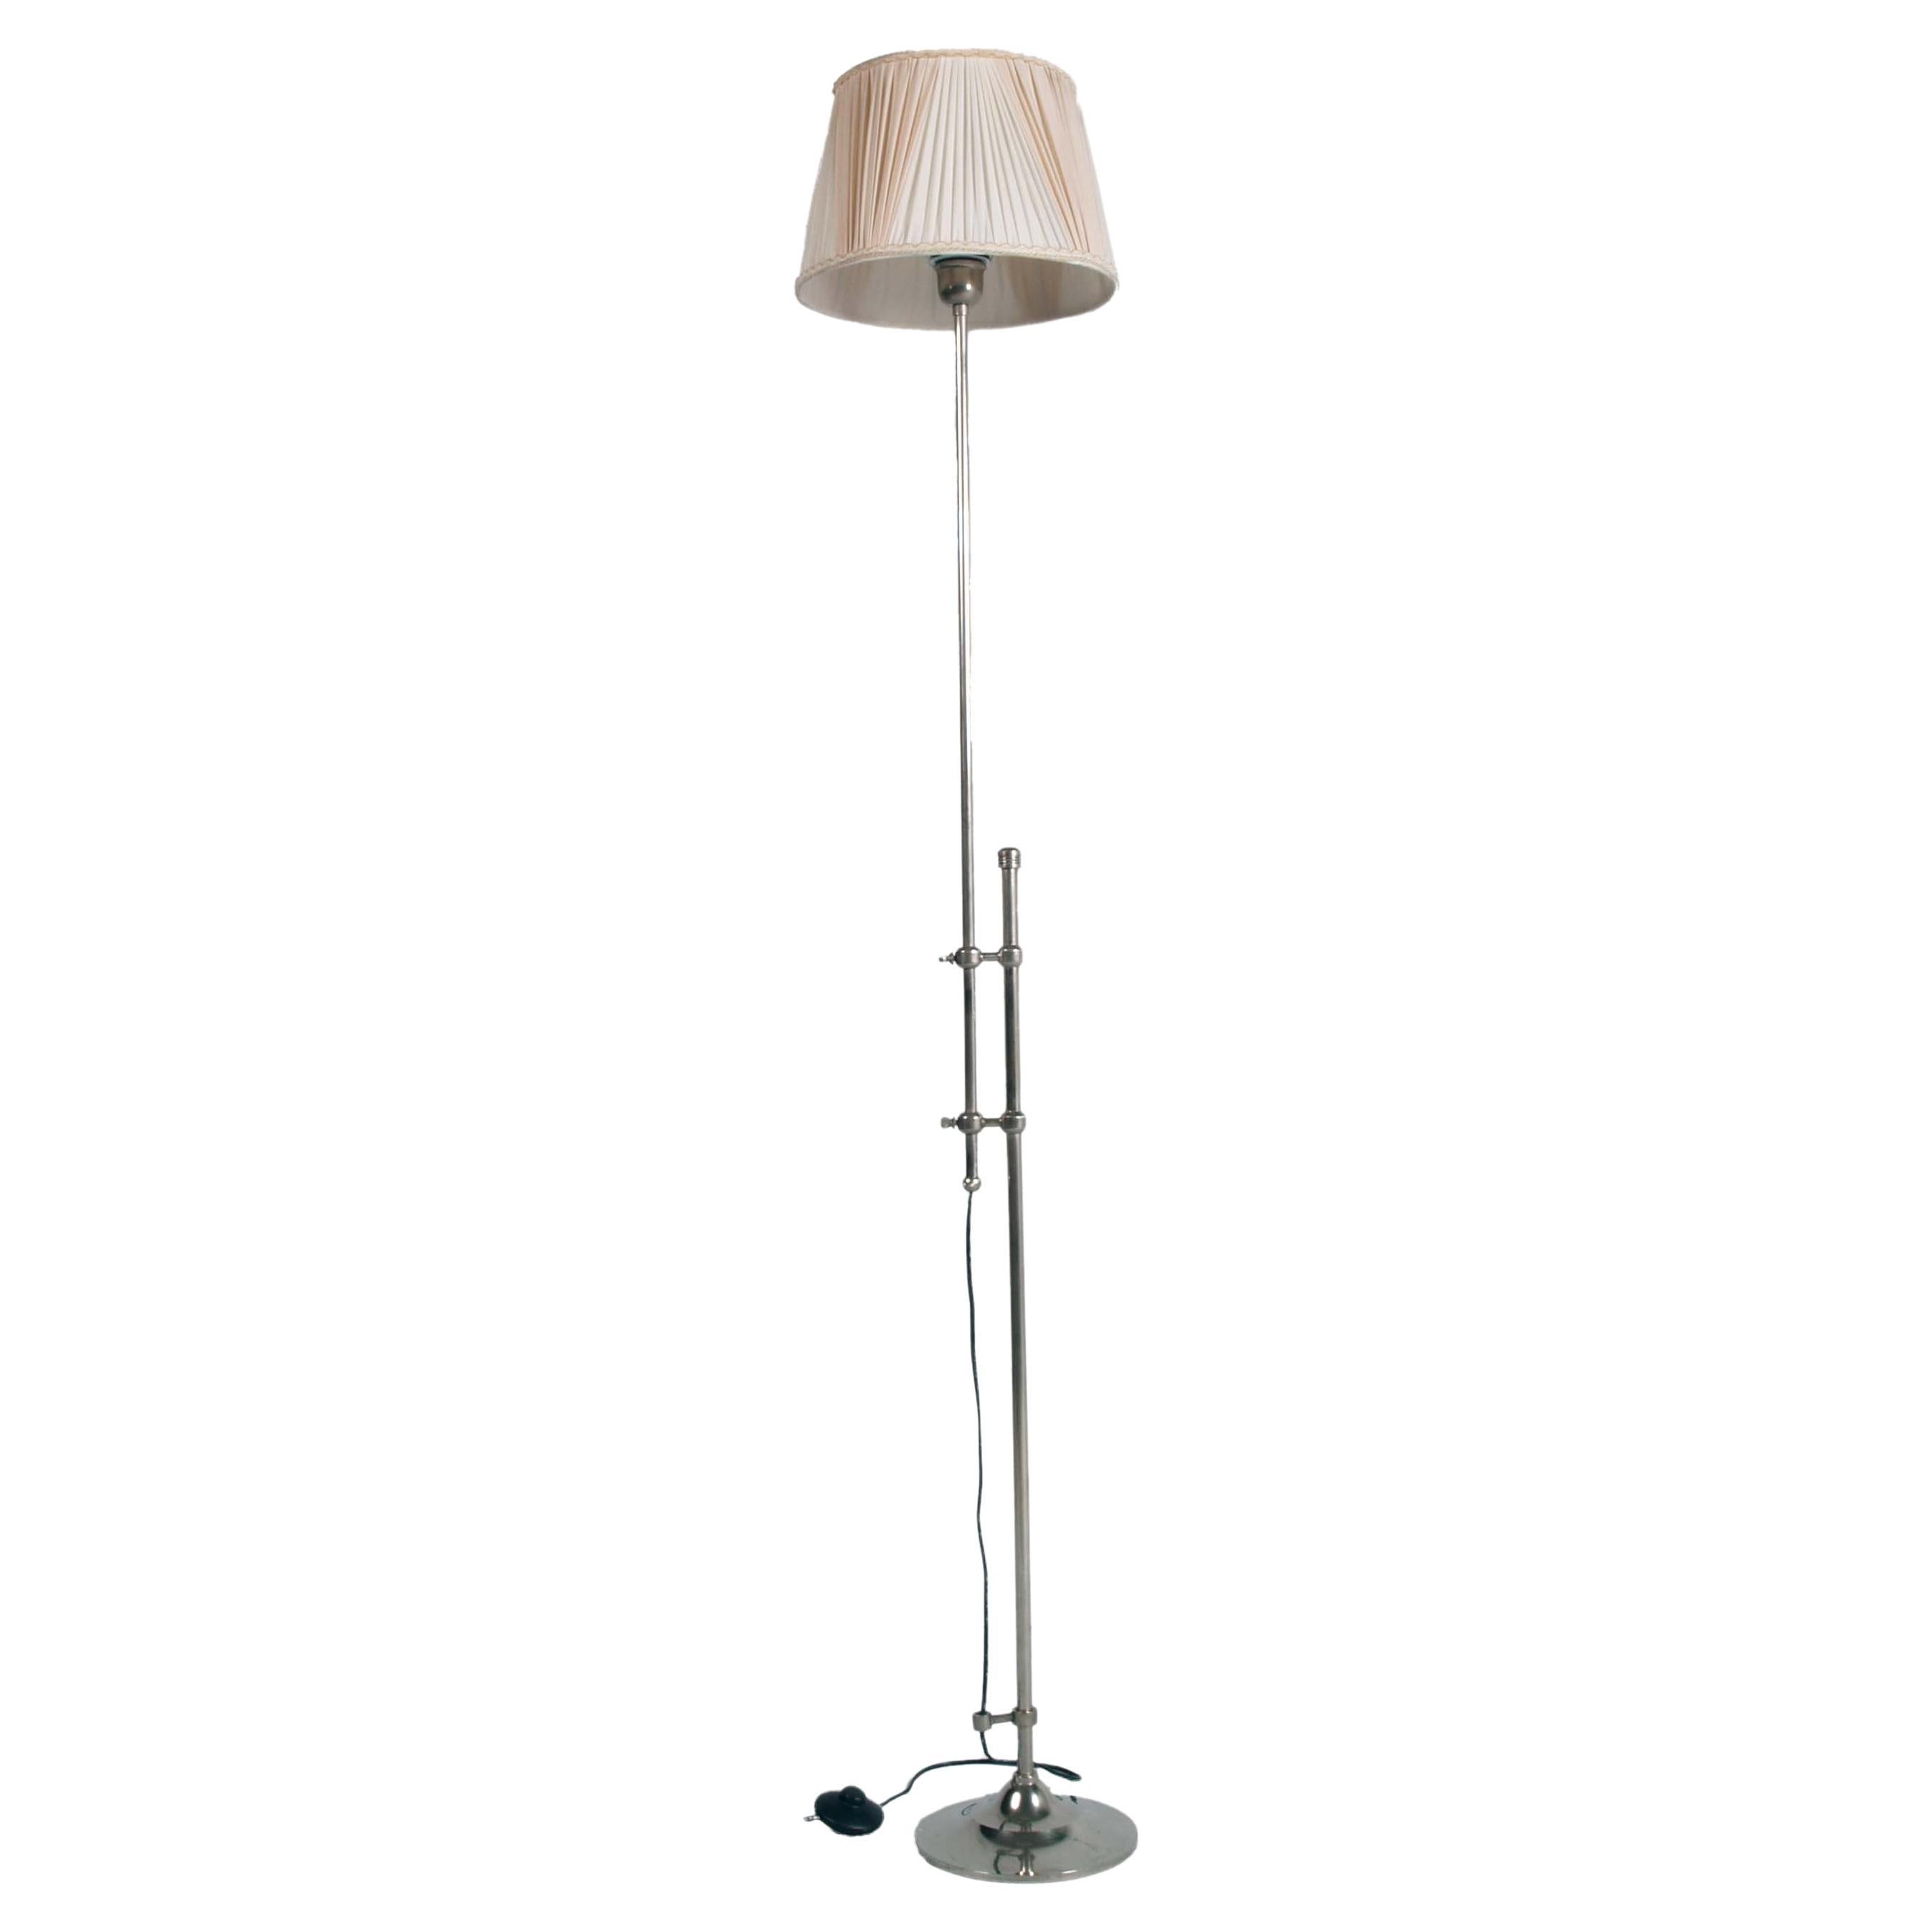 Mid Century Floor Lamp by Tommaso Barbi for Bottega Gadda with adjustable height